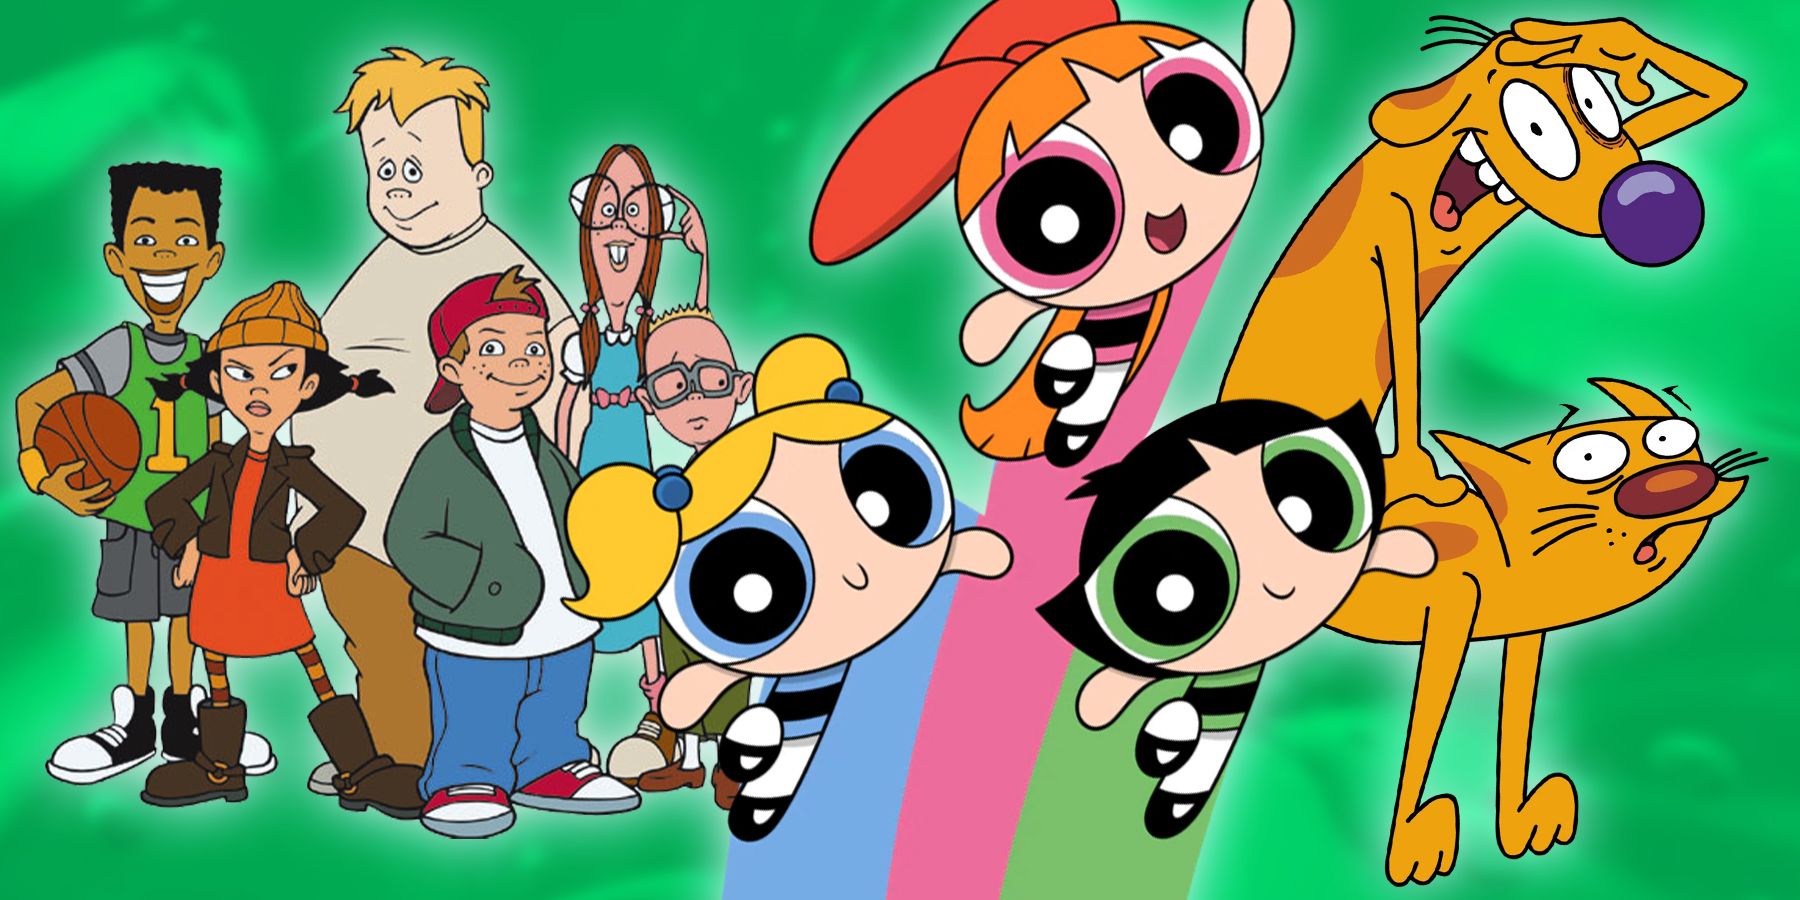 The main cast of the cartoon show Recess, The Powerpuff Girls, and CatDog